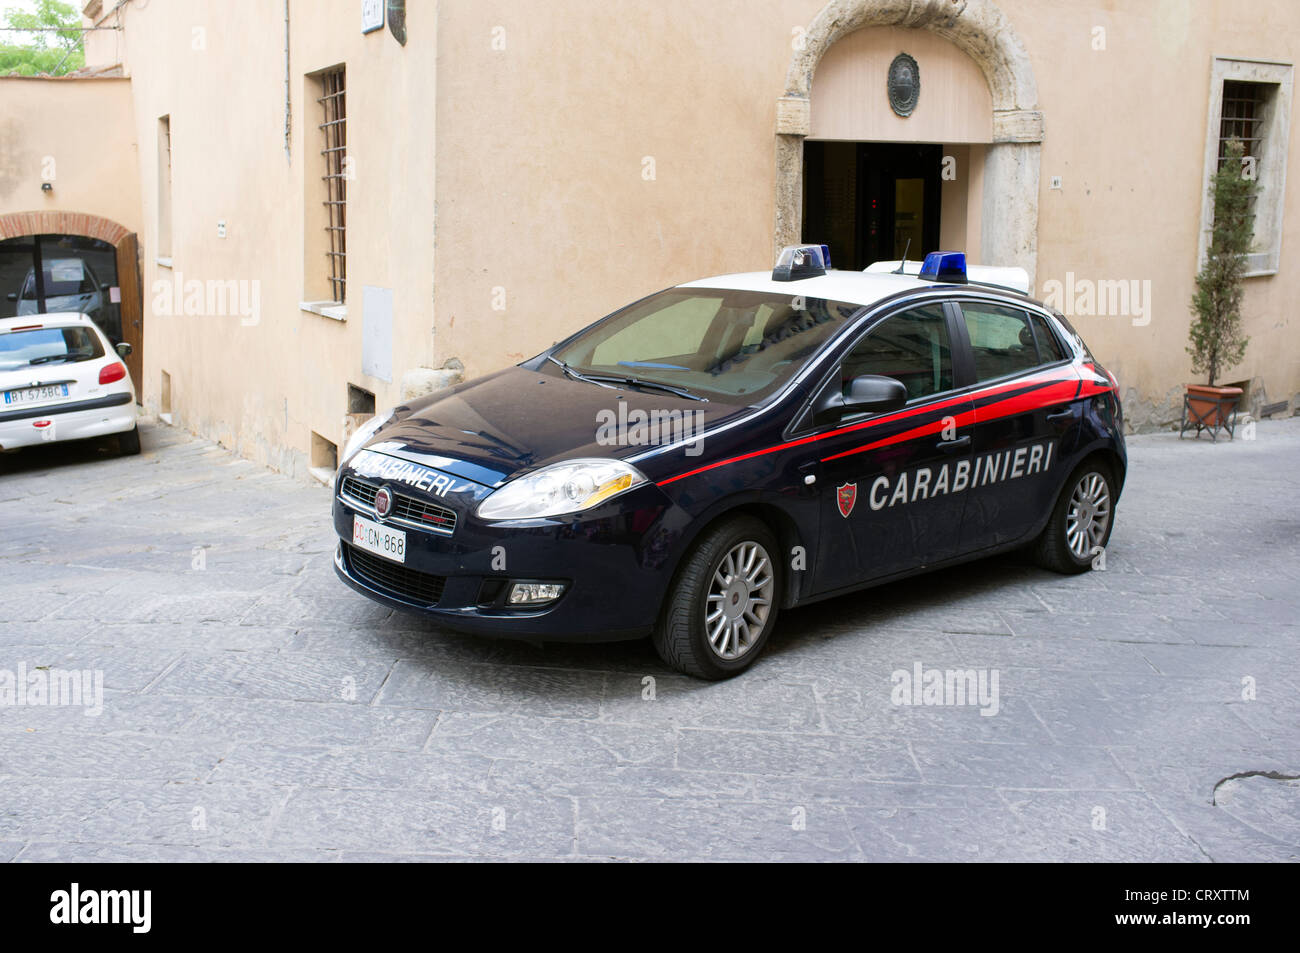 Italian Carabinieri police car parked in a street Stock Photo